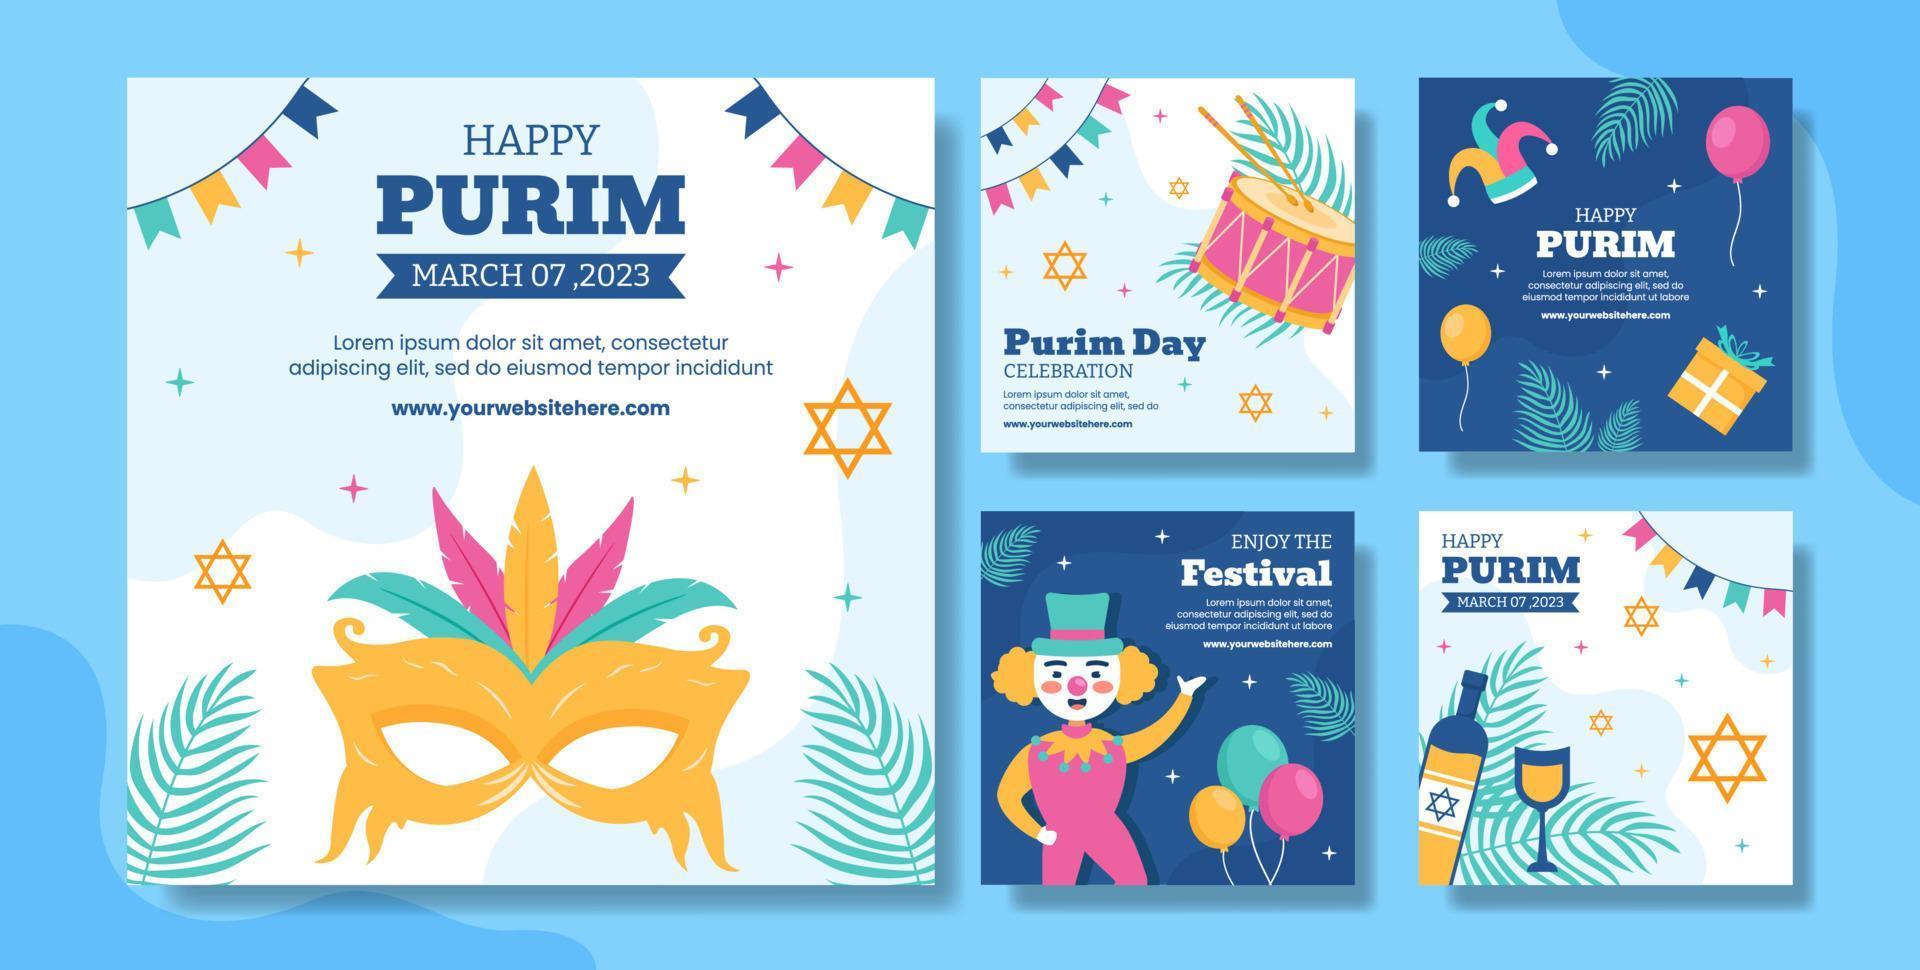 Happy Purim Day Social Media Post Flat Cartoon Hand Drawn Templates Illustration vector